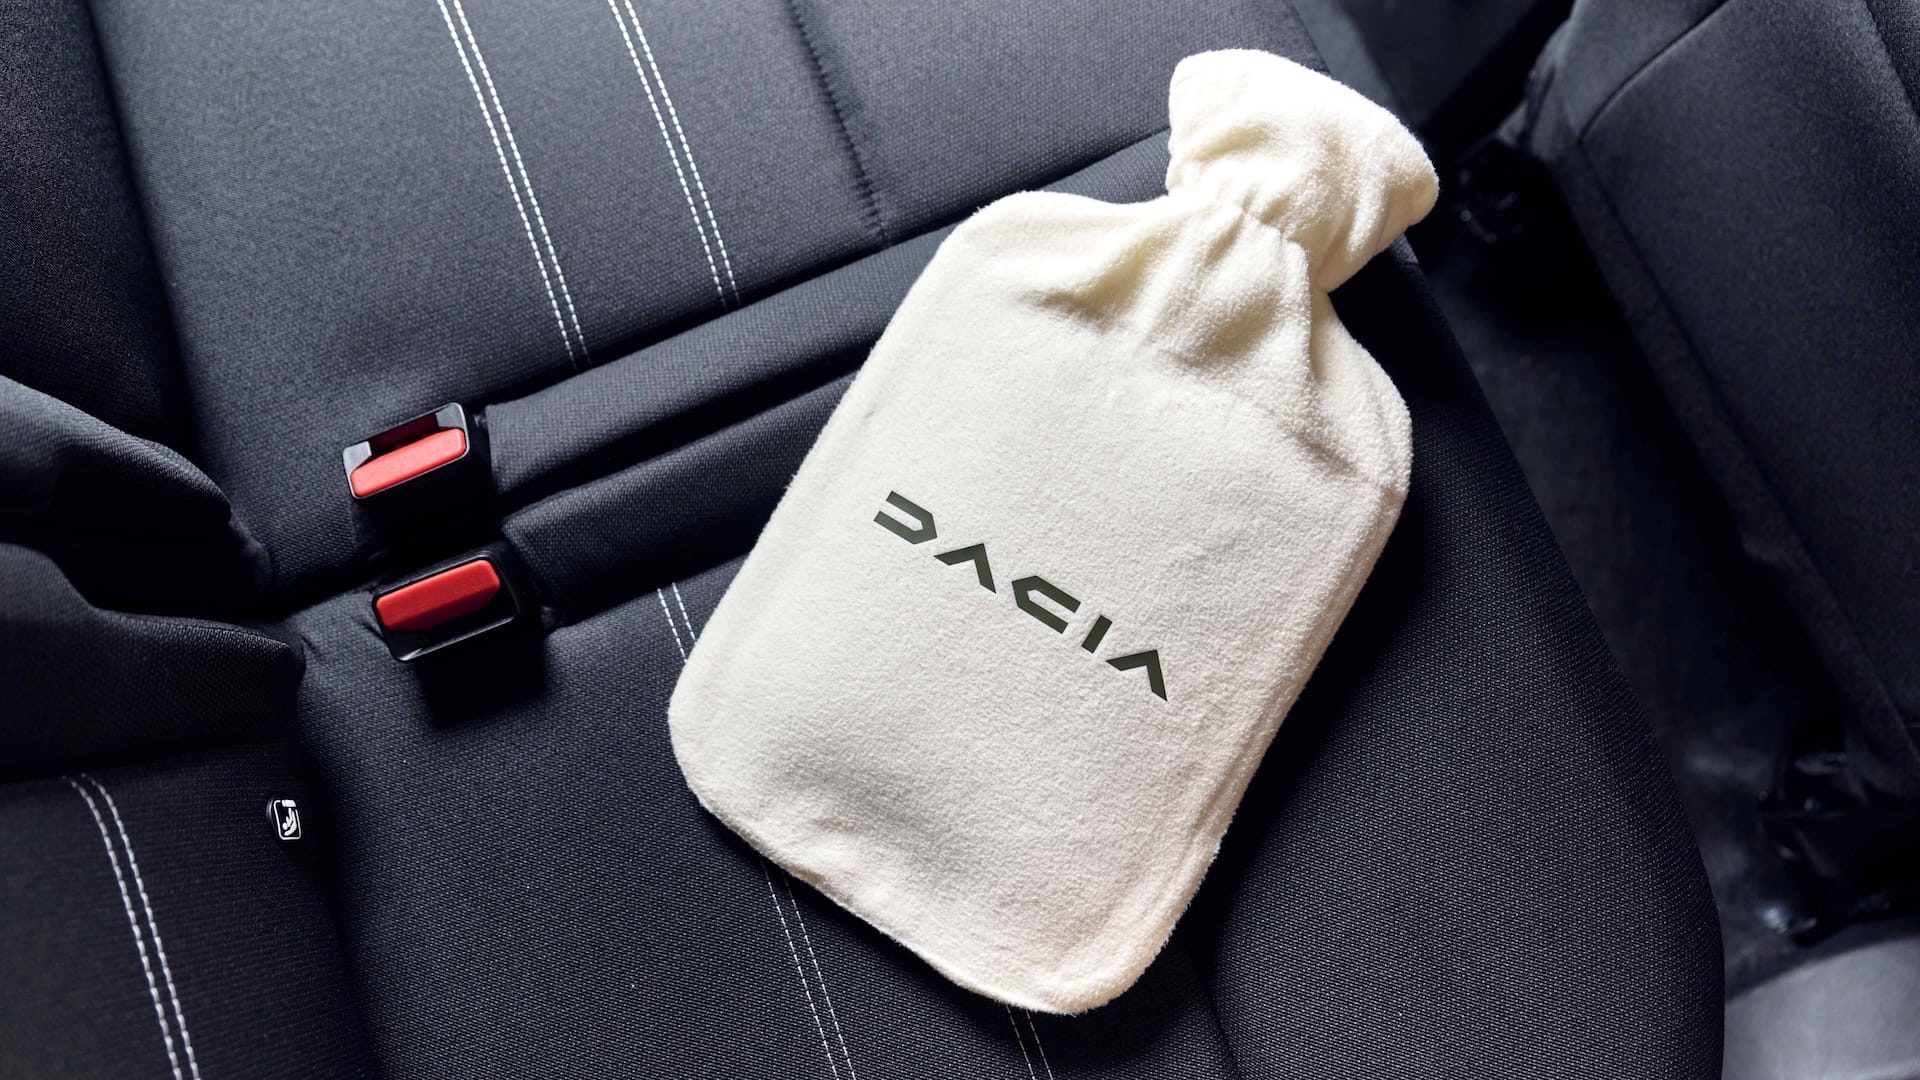 Dacia heated seats saver